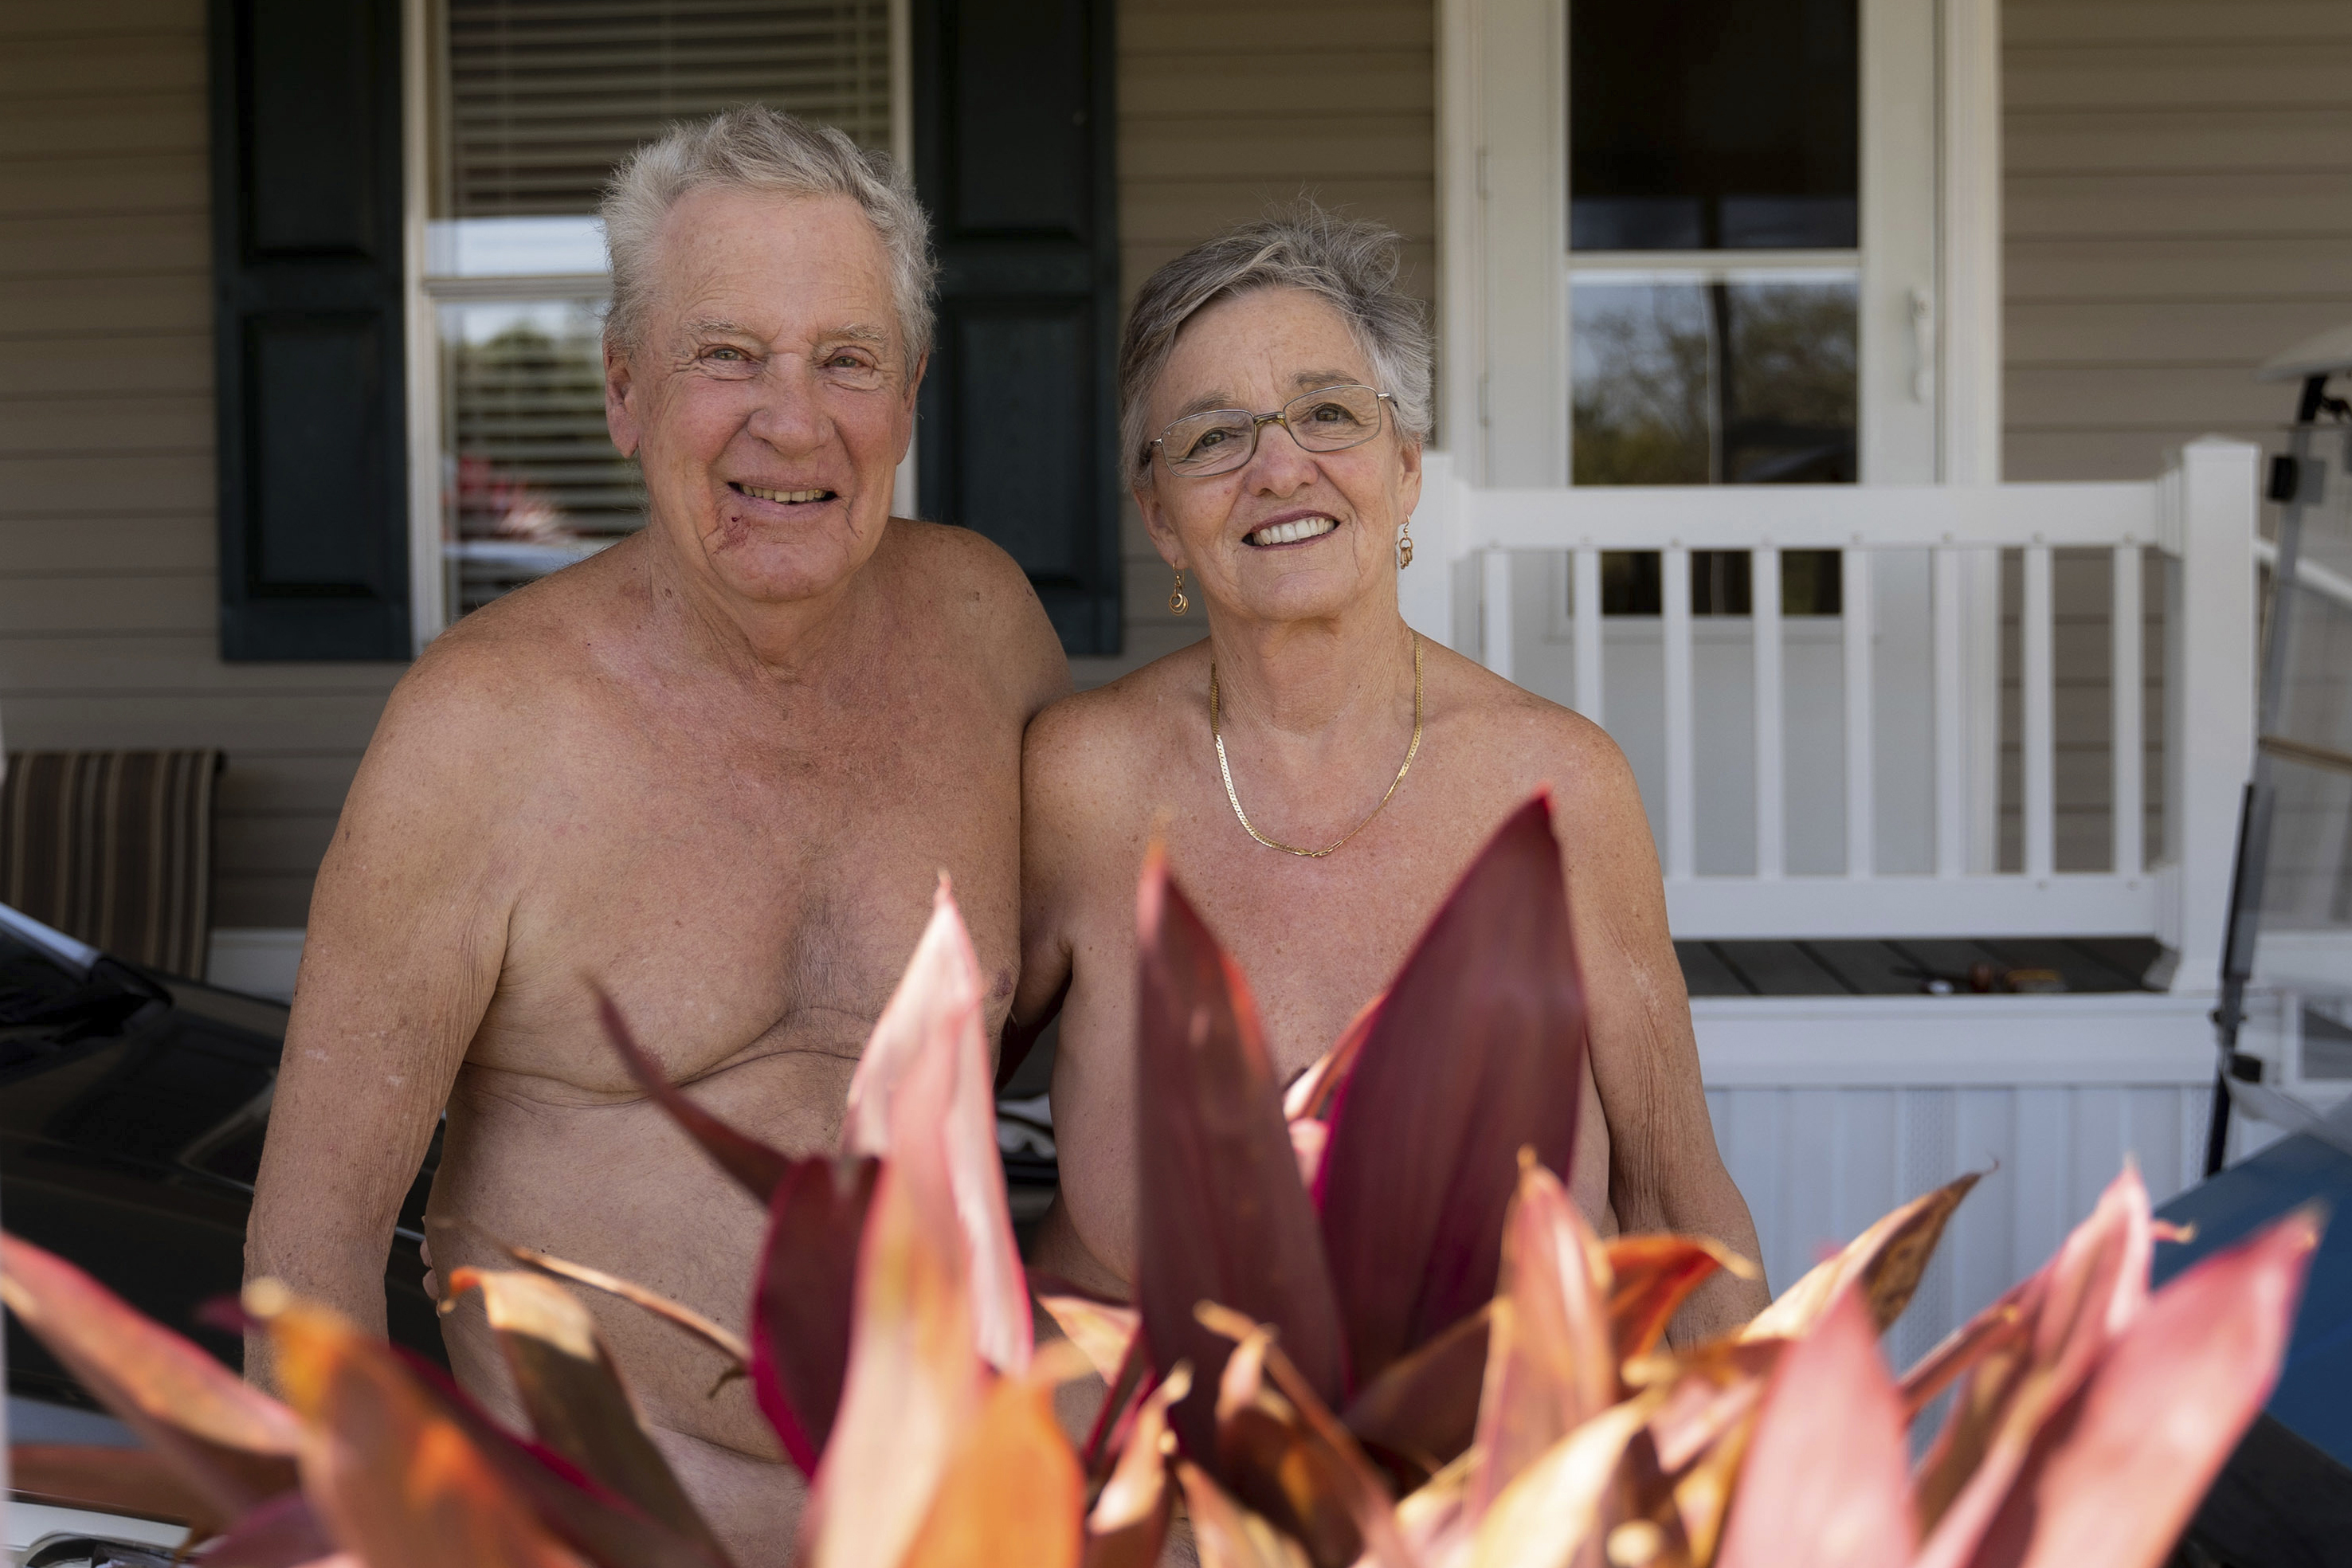 billy jason isturis add homemade family nudist photo